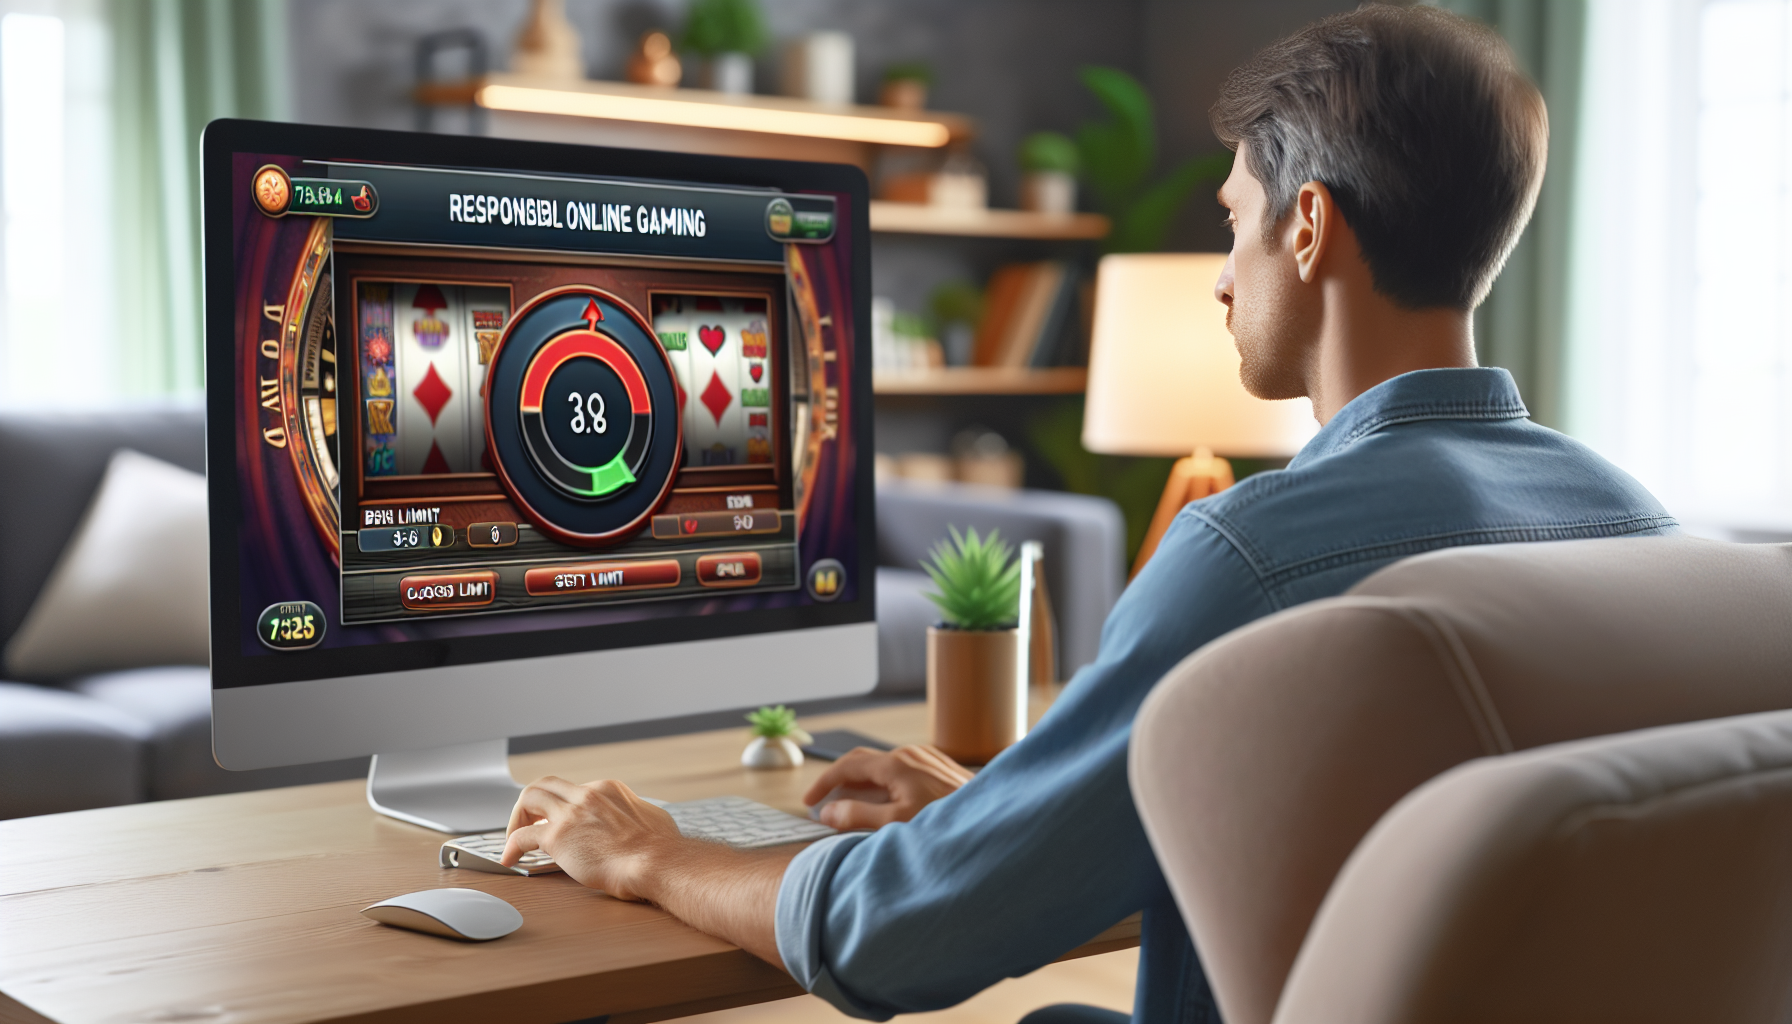 Responsible Gambling: Playing Smart and Staying Safe